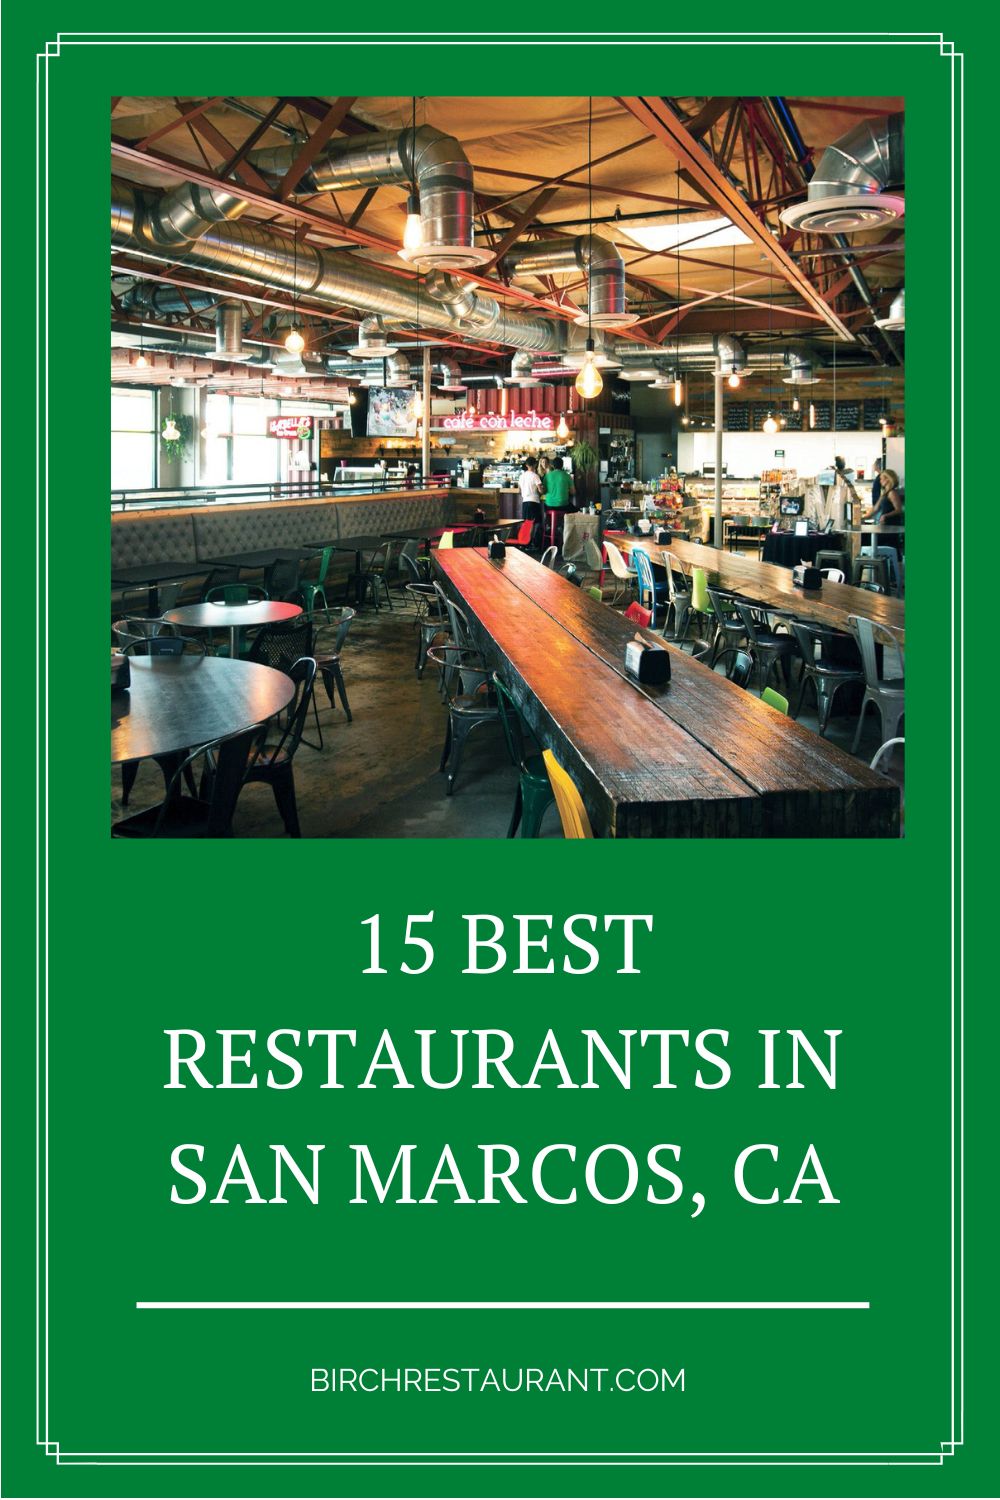 Best Restaurants in San Marcos